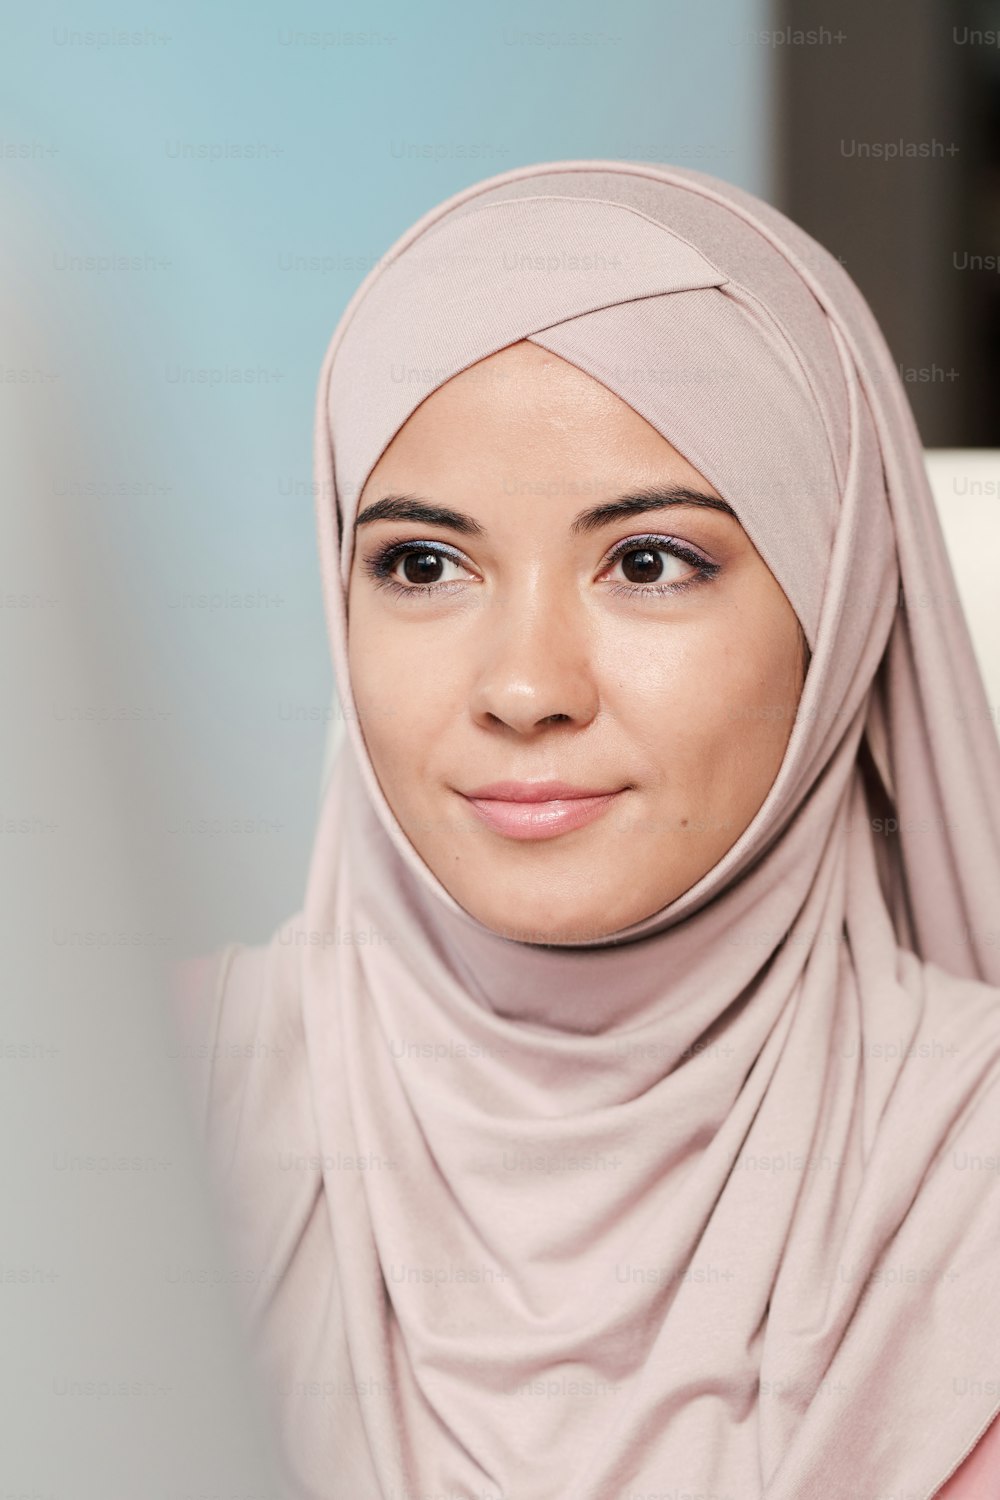 Jolie jeune femme musulmane en hijab rose regardant un moniteur dans un bureau moderne